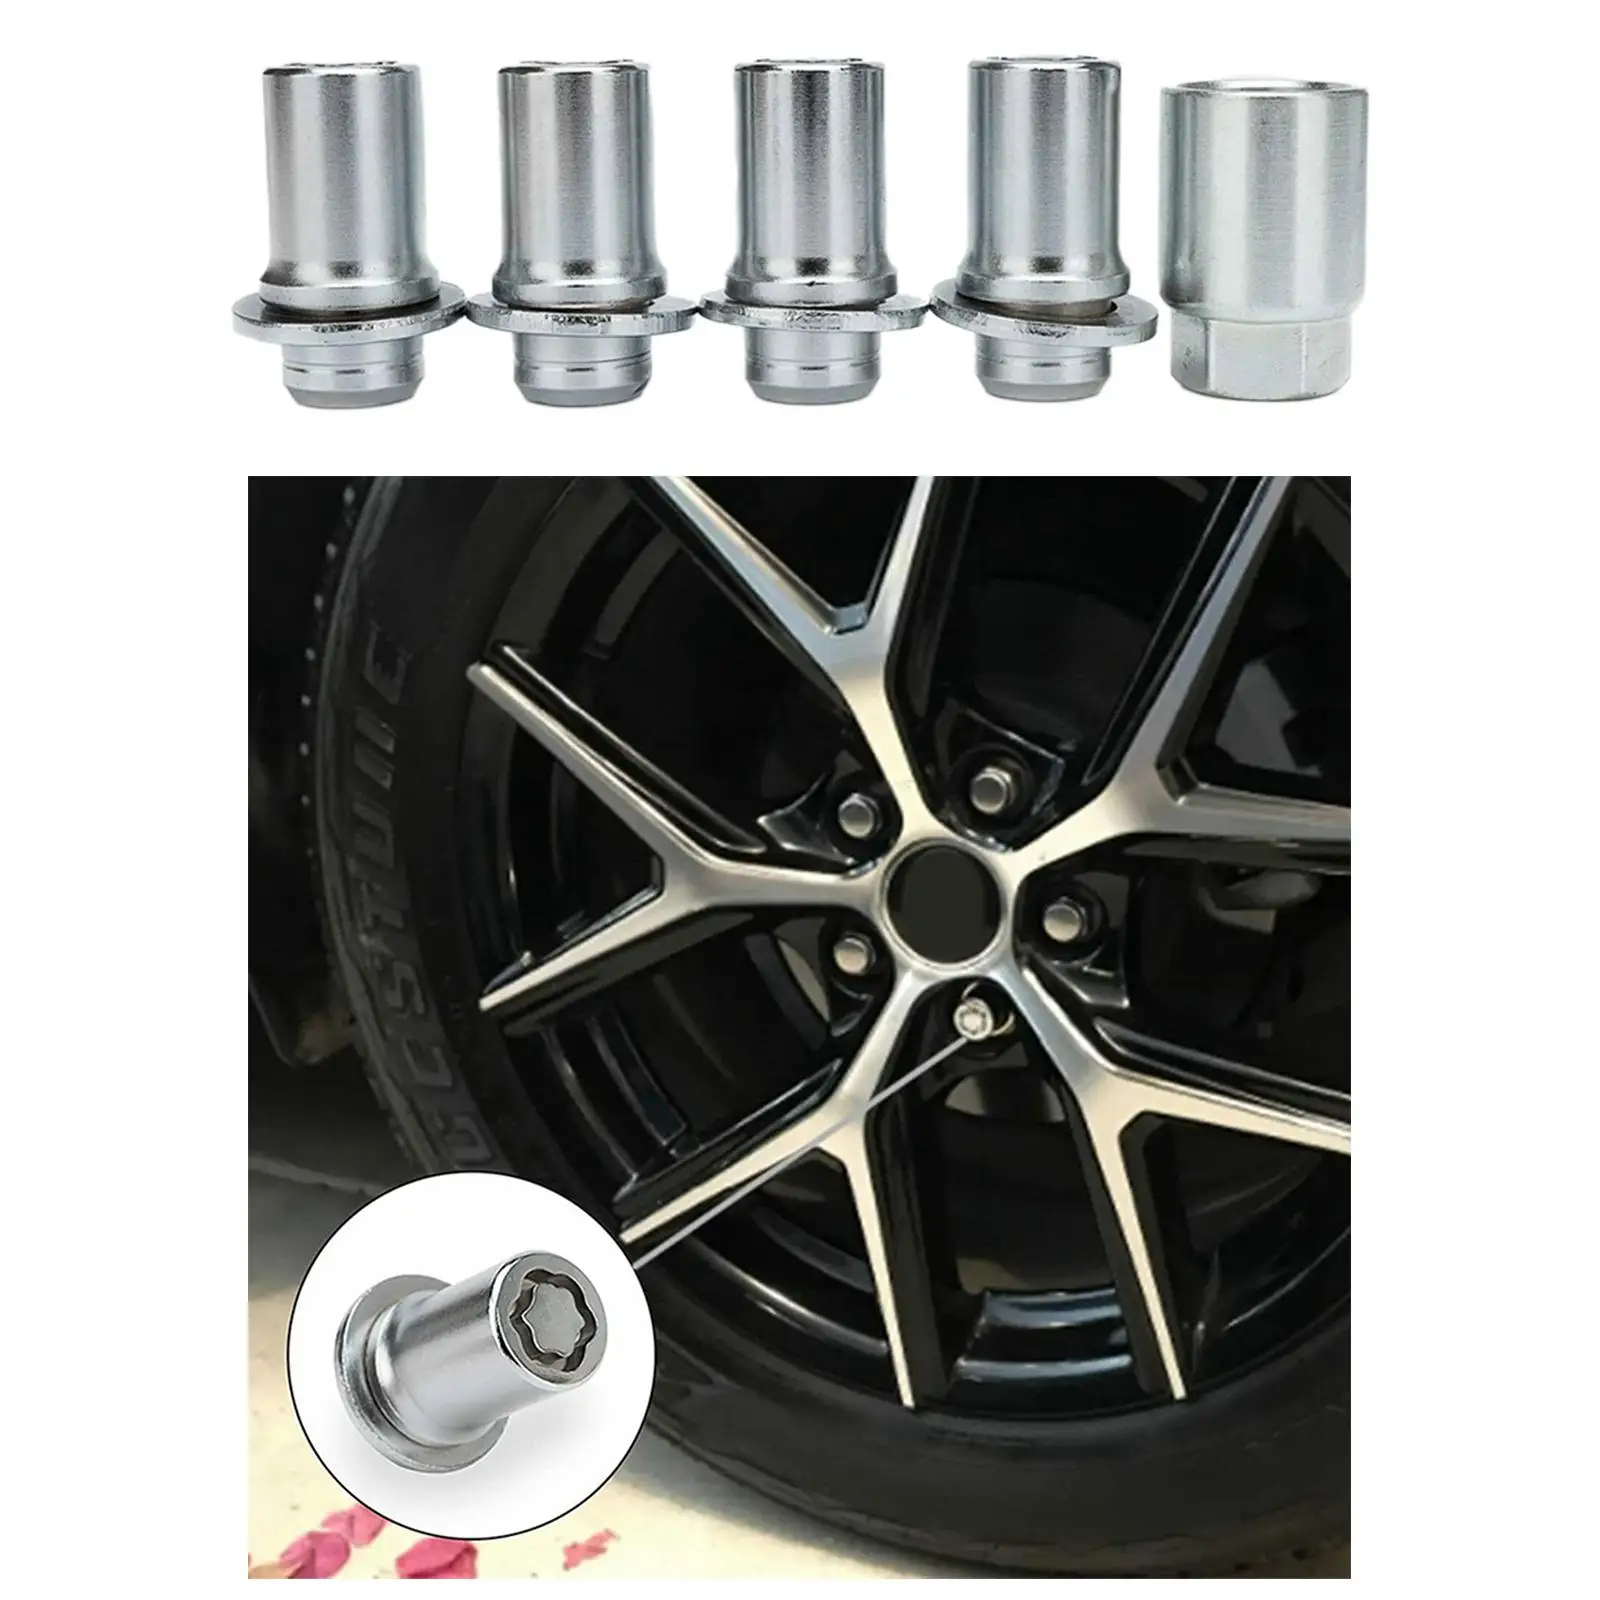 5Pcs Car Wheel Lock Lug Nut Set 0027600901 Anti Theft M12x1.5 Accessories for Solara for 4Runner Corolla GS400